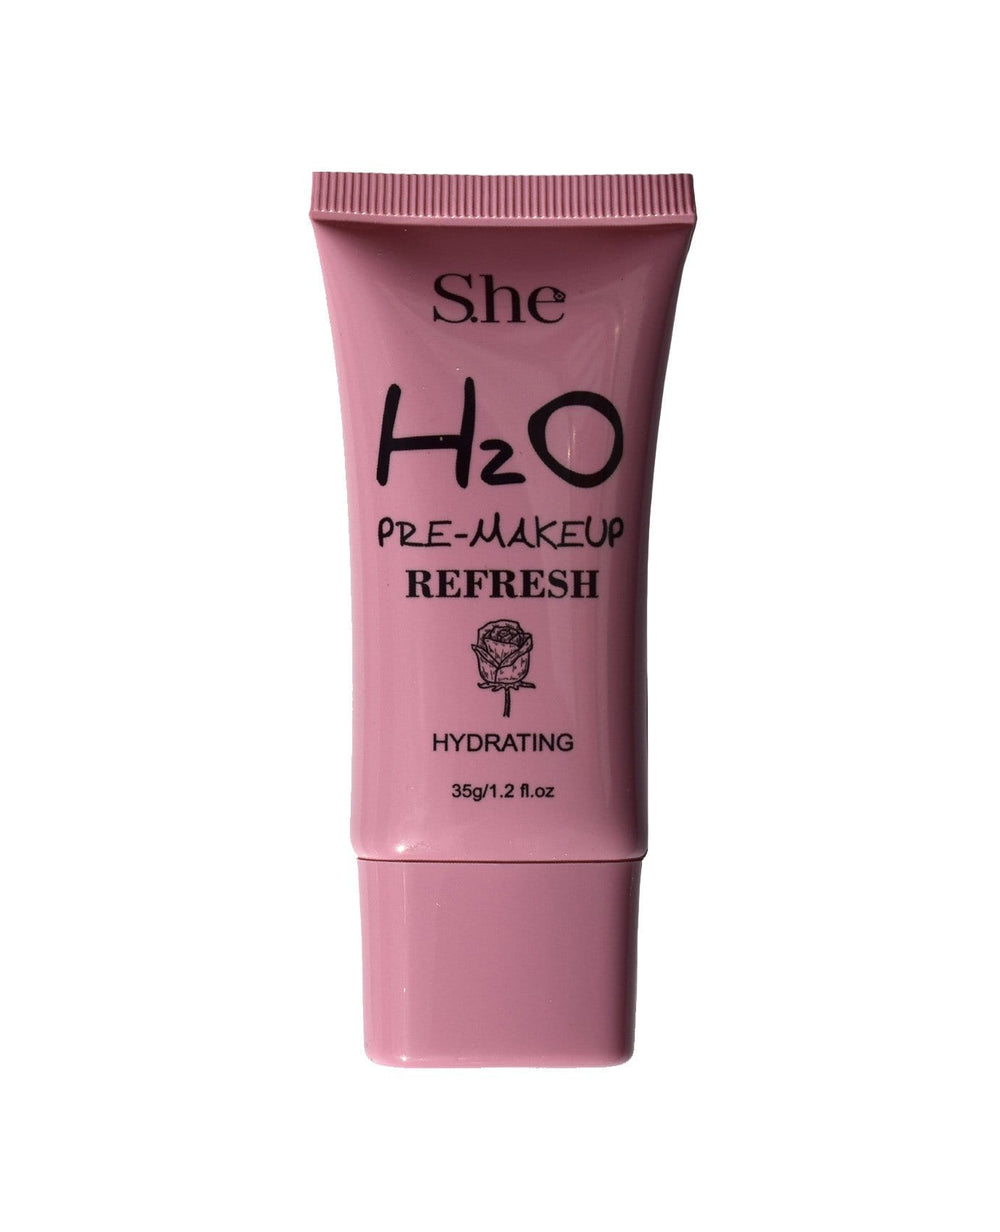 S.he H2O Face Primer